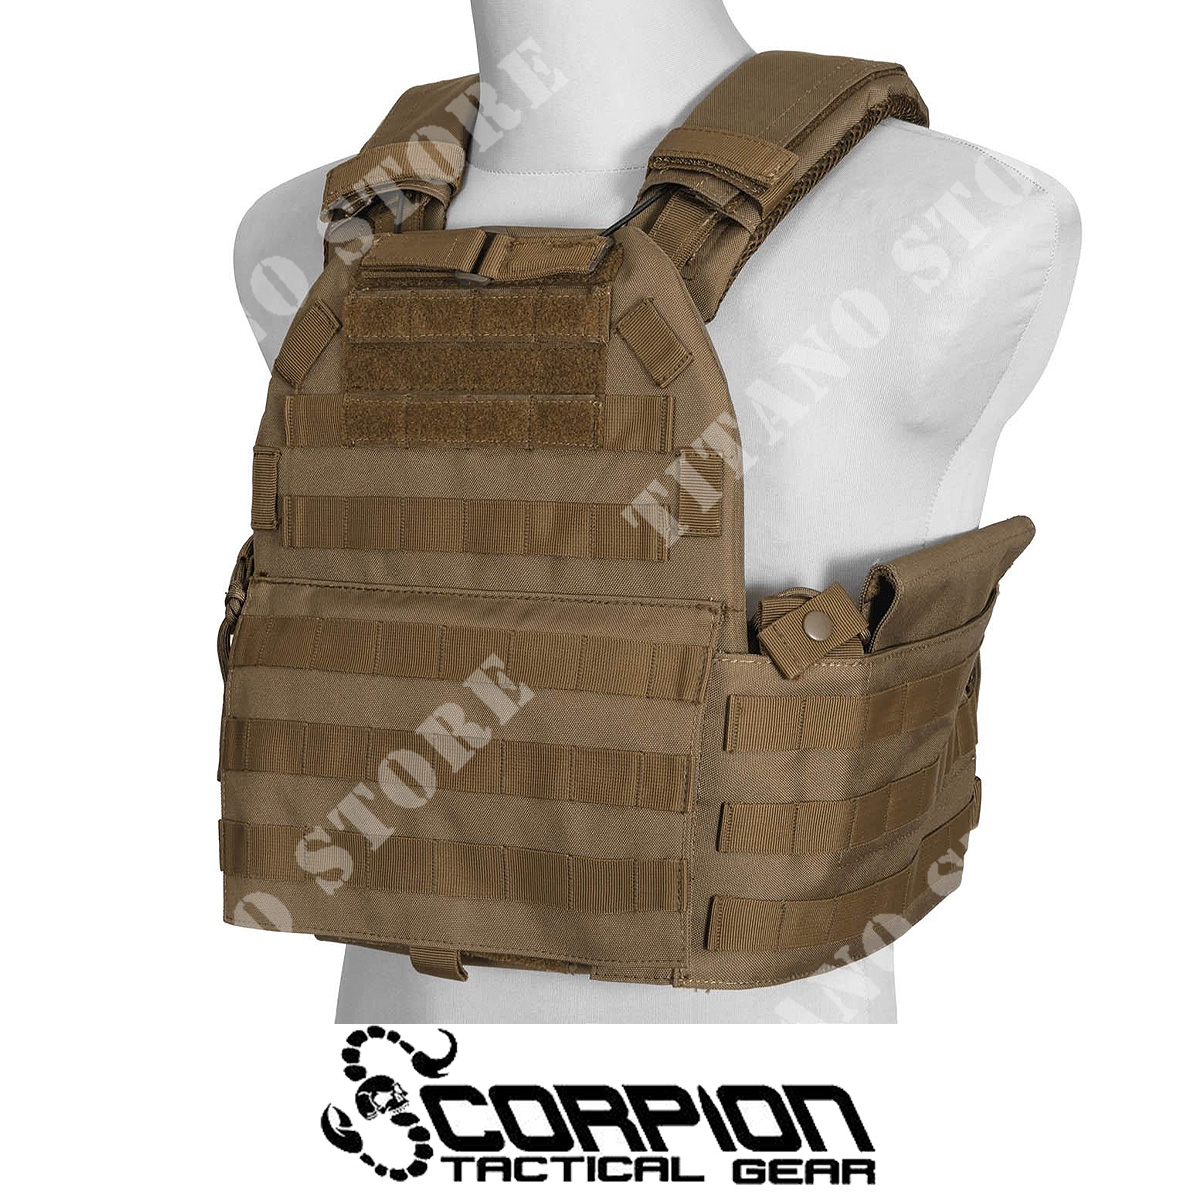 Plate carrier qr springs scorpion tactical gear (stg-cpcqr